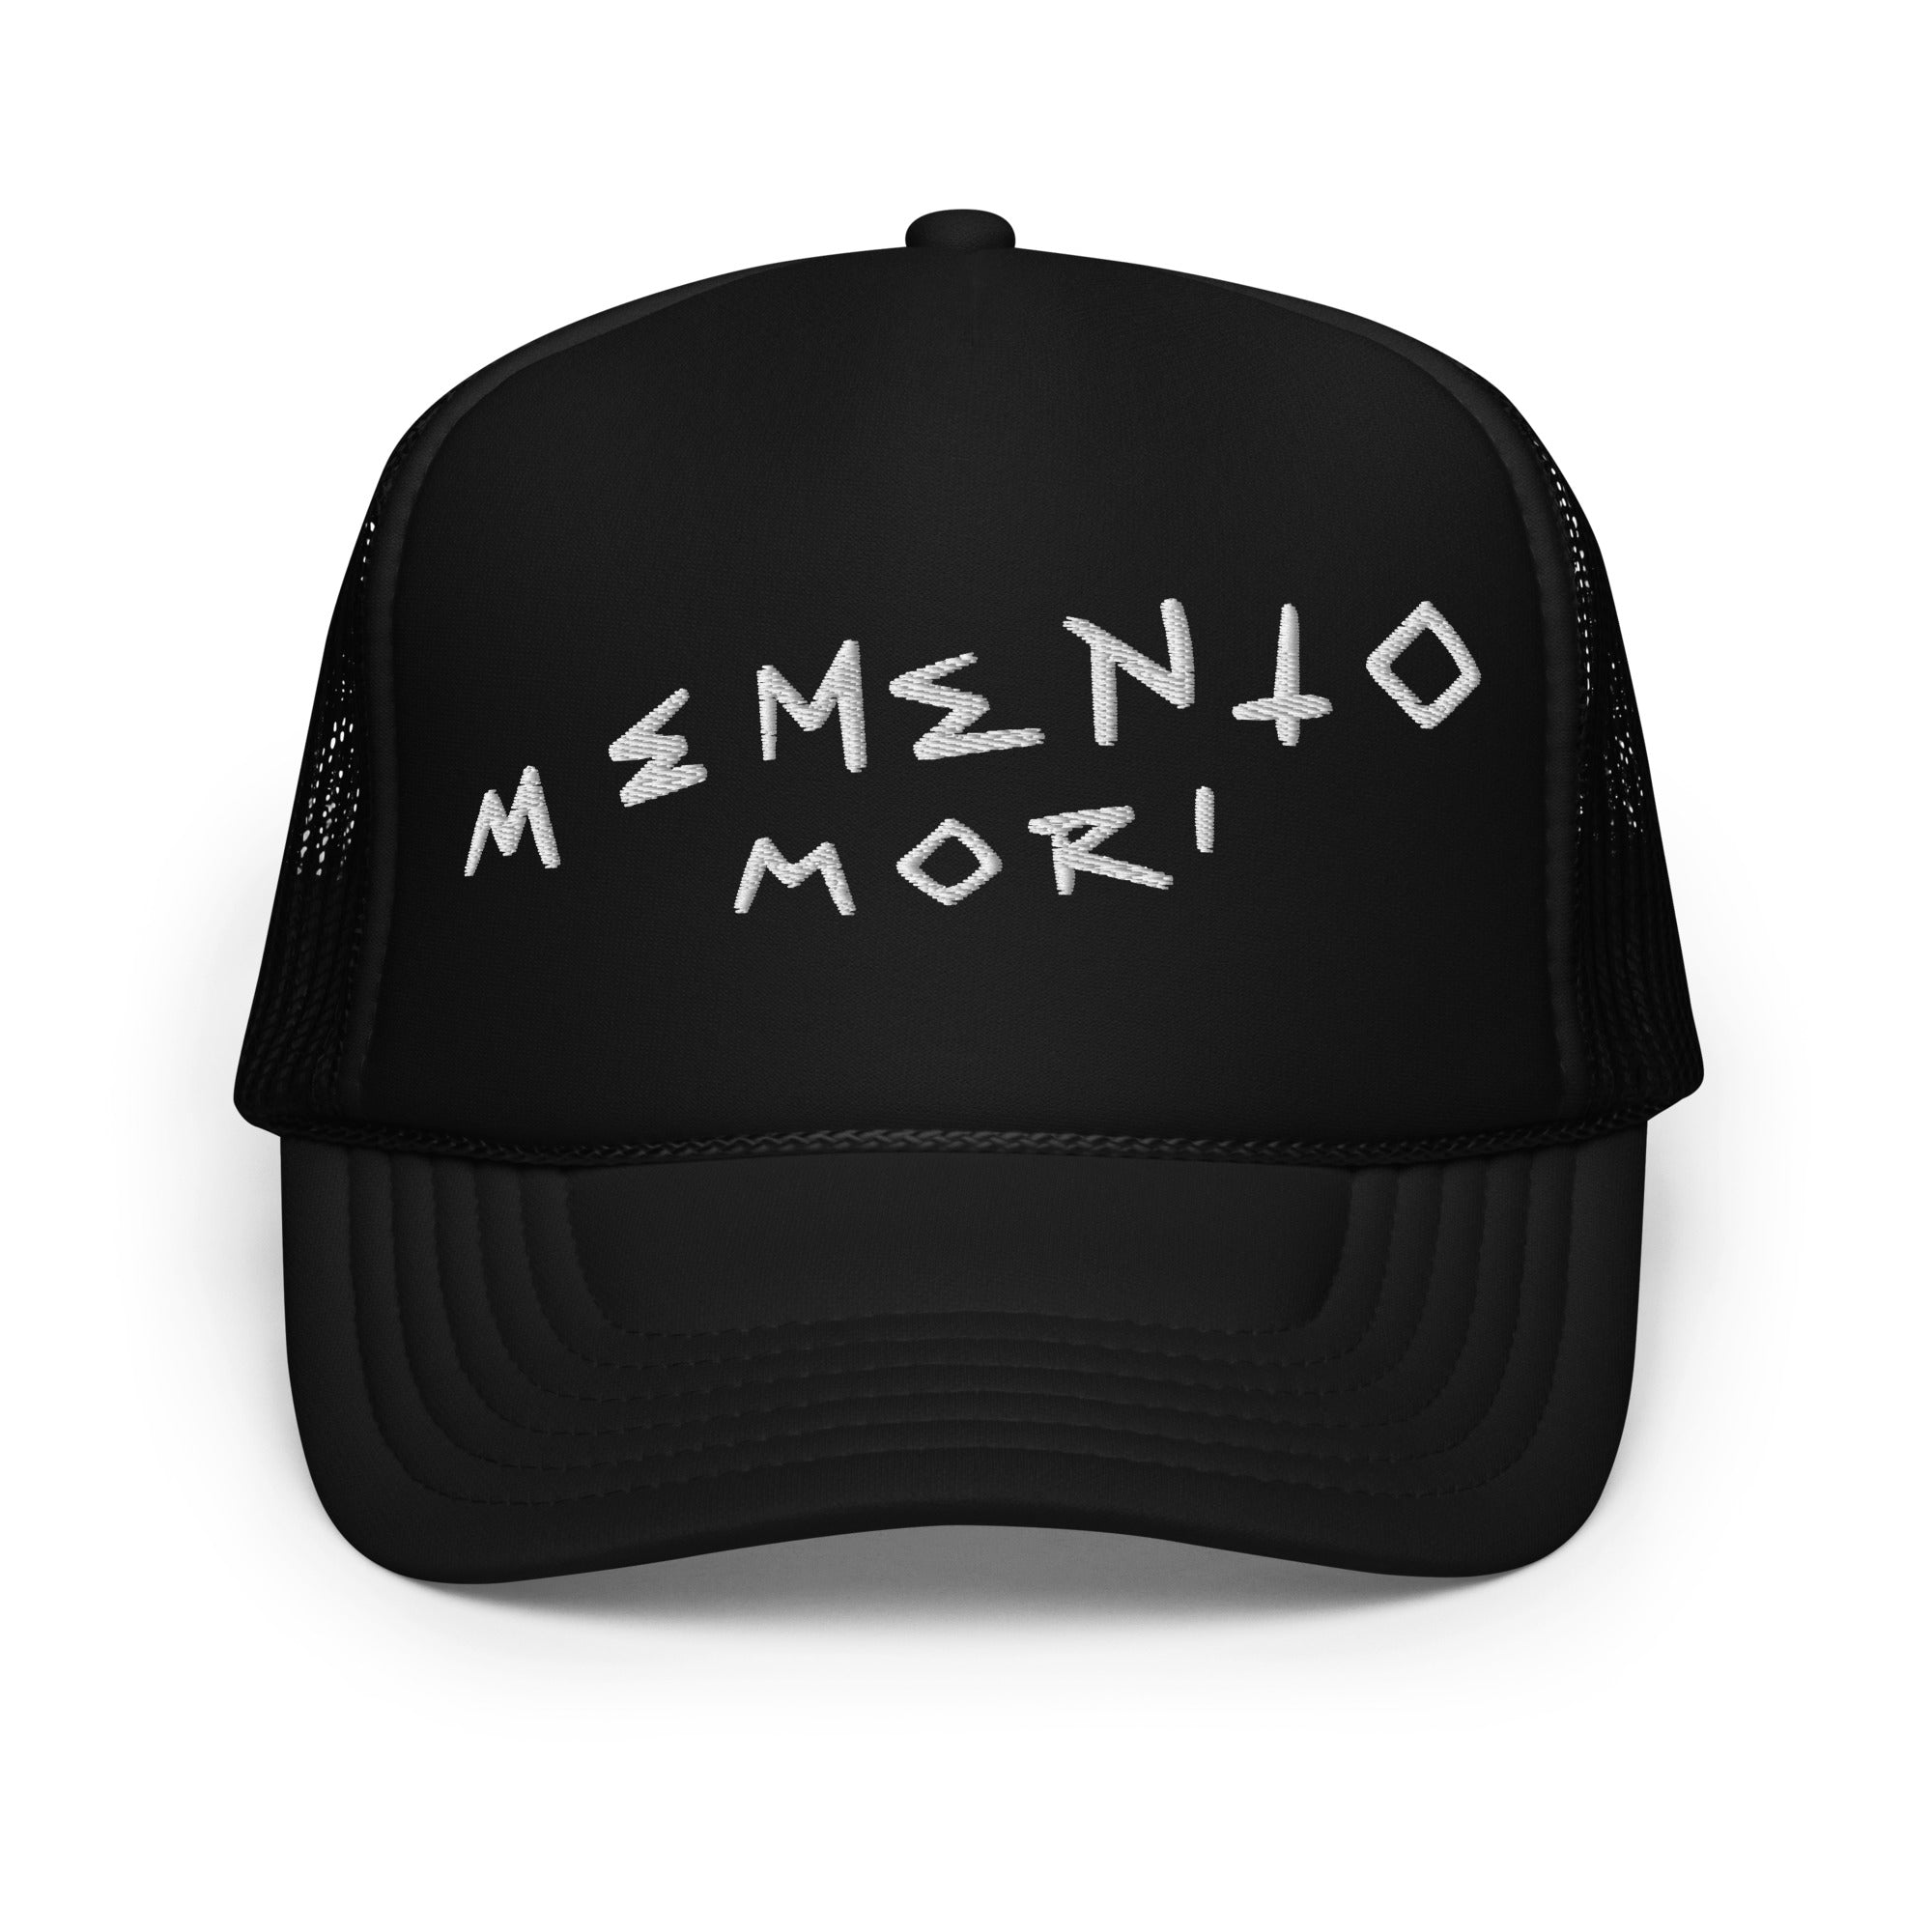 Memento Mori White Foam trucker hat